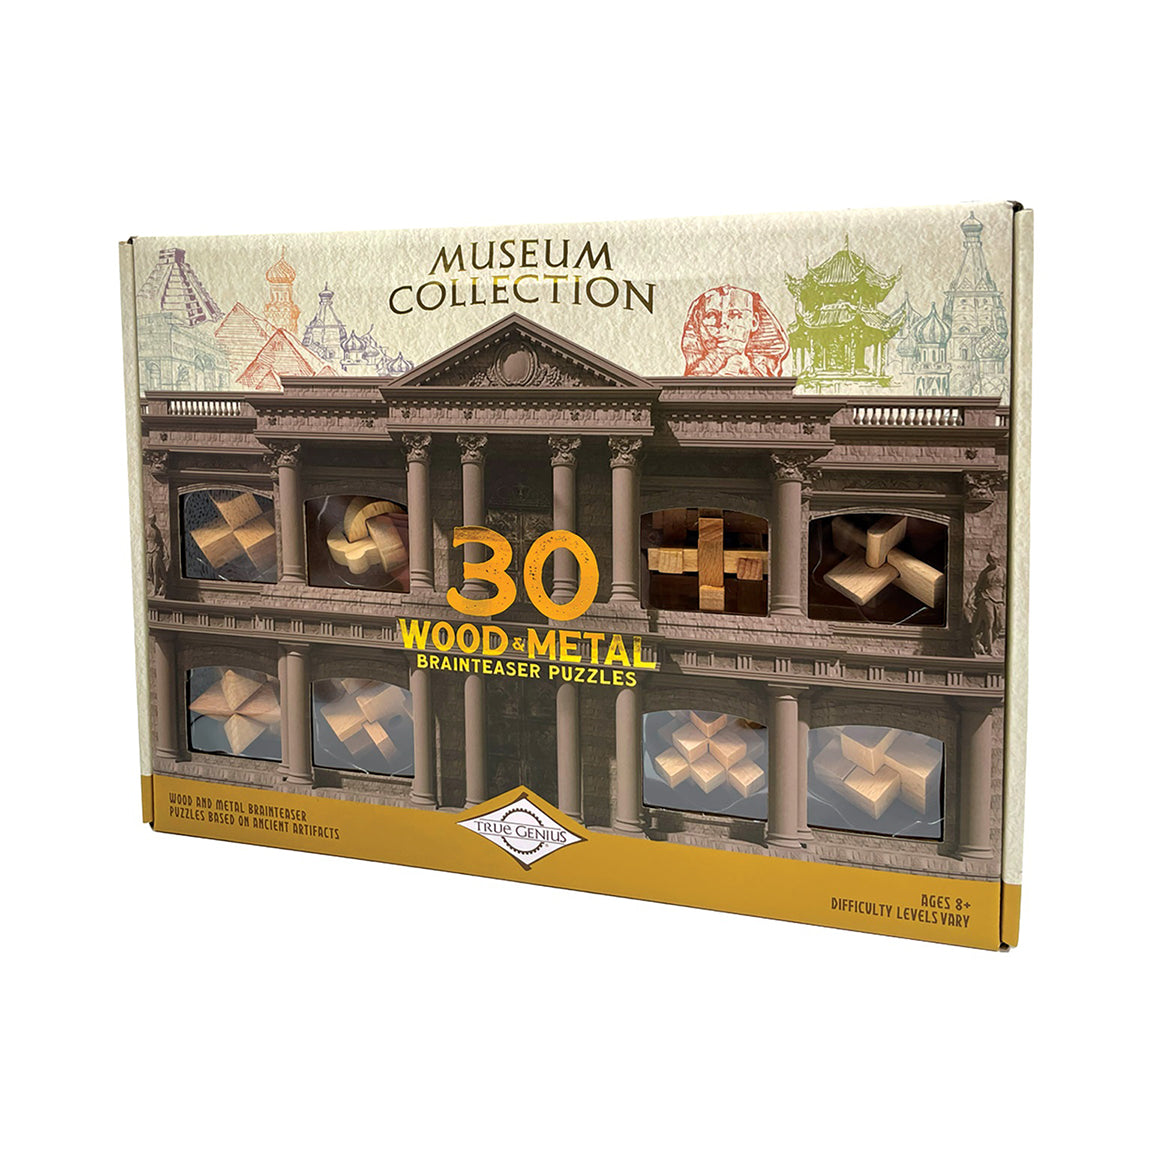 Museum Collection Puzzle Set